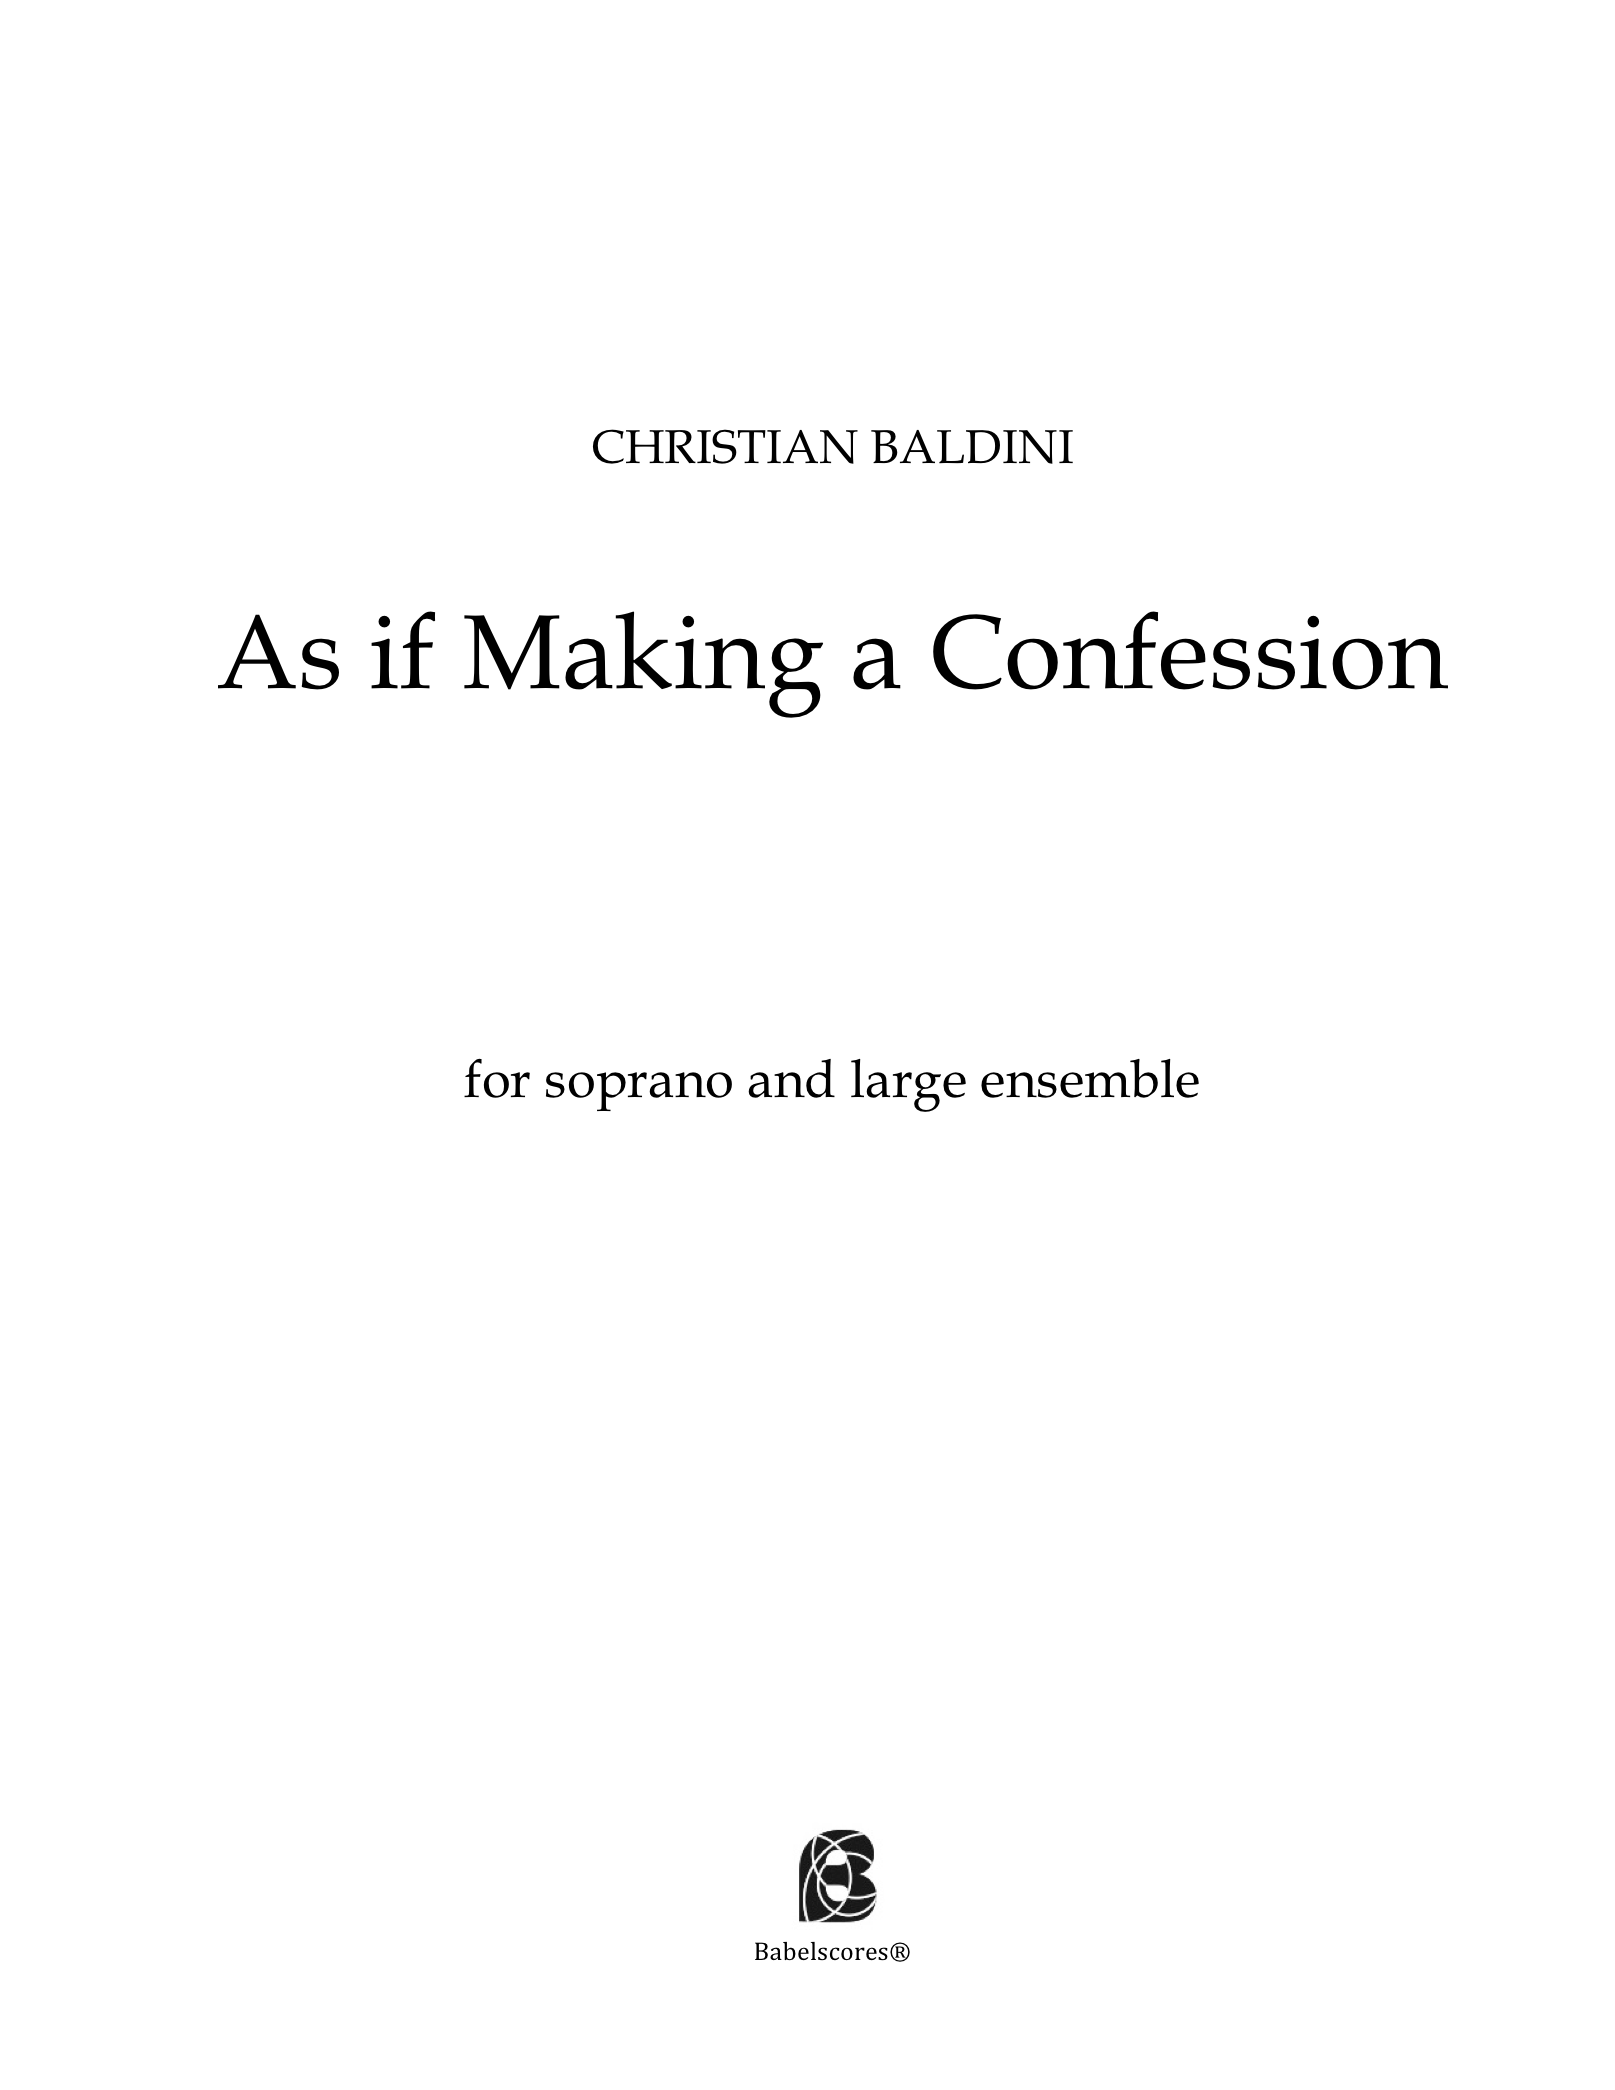 As if Making a Confession FULL SCORE Baldini